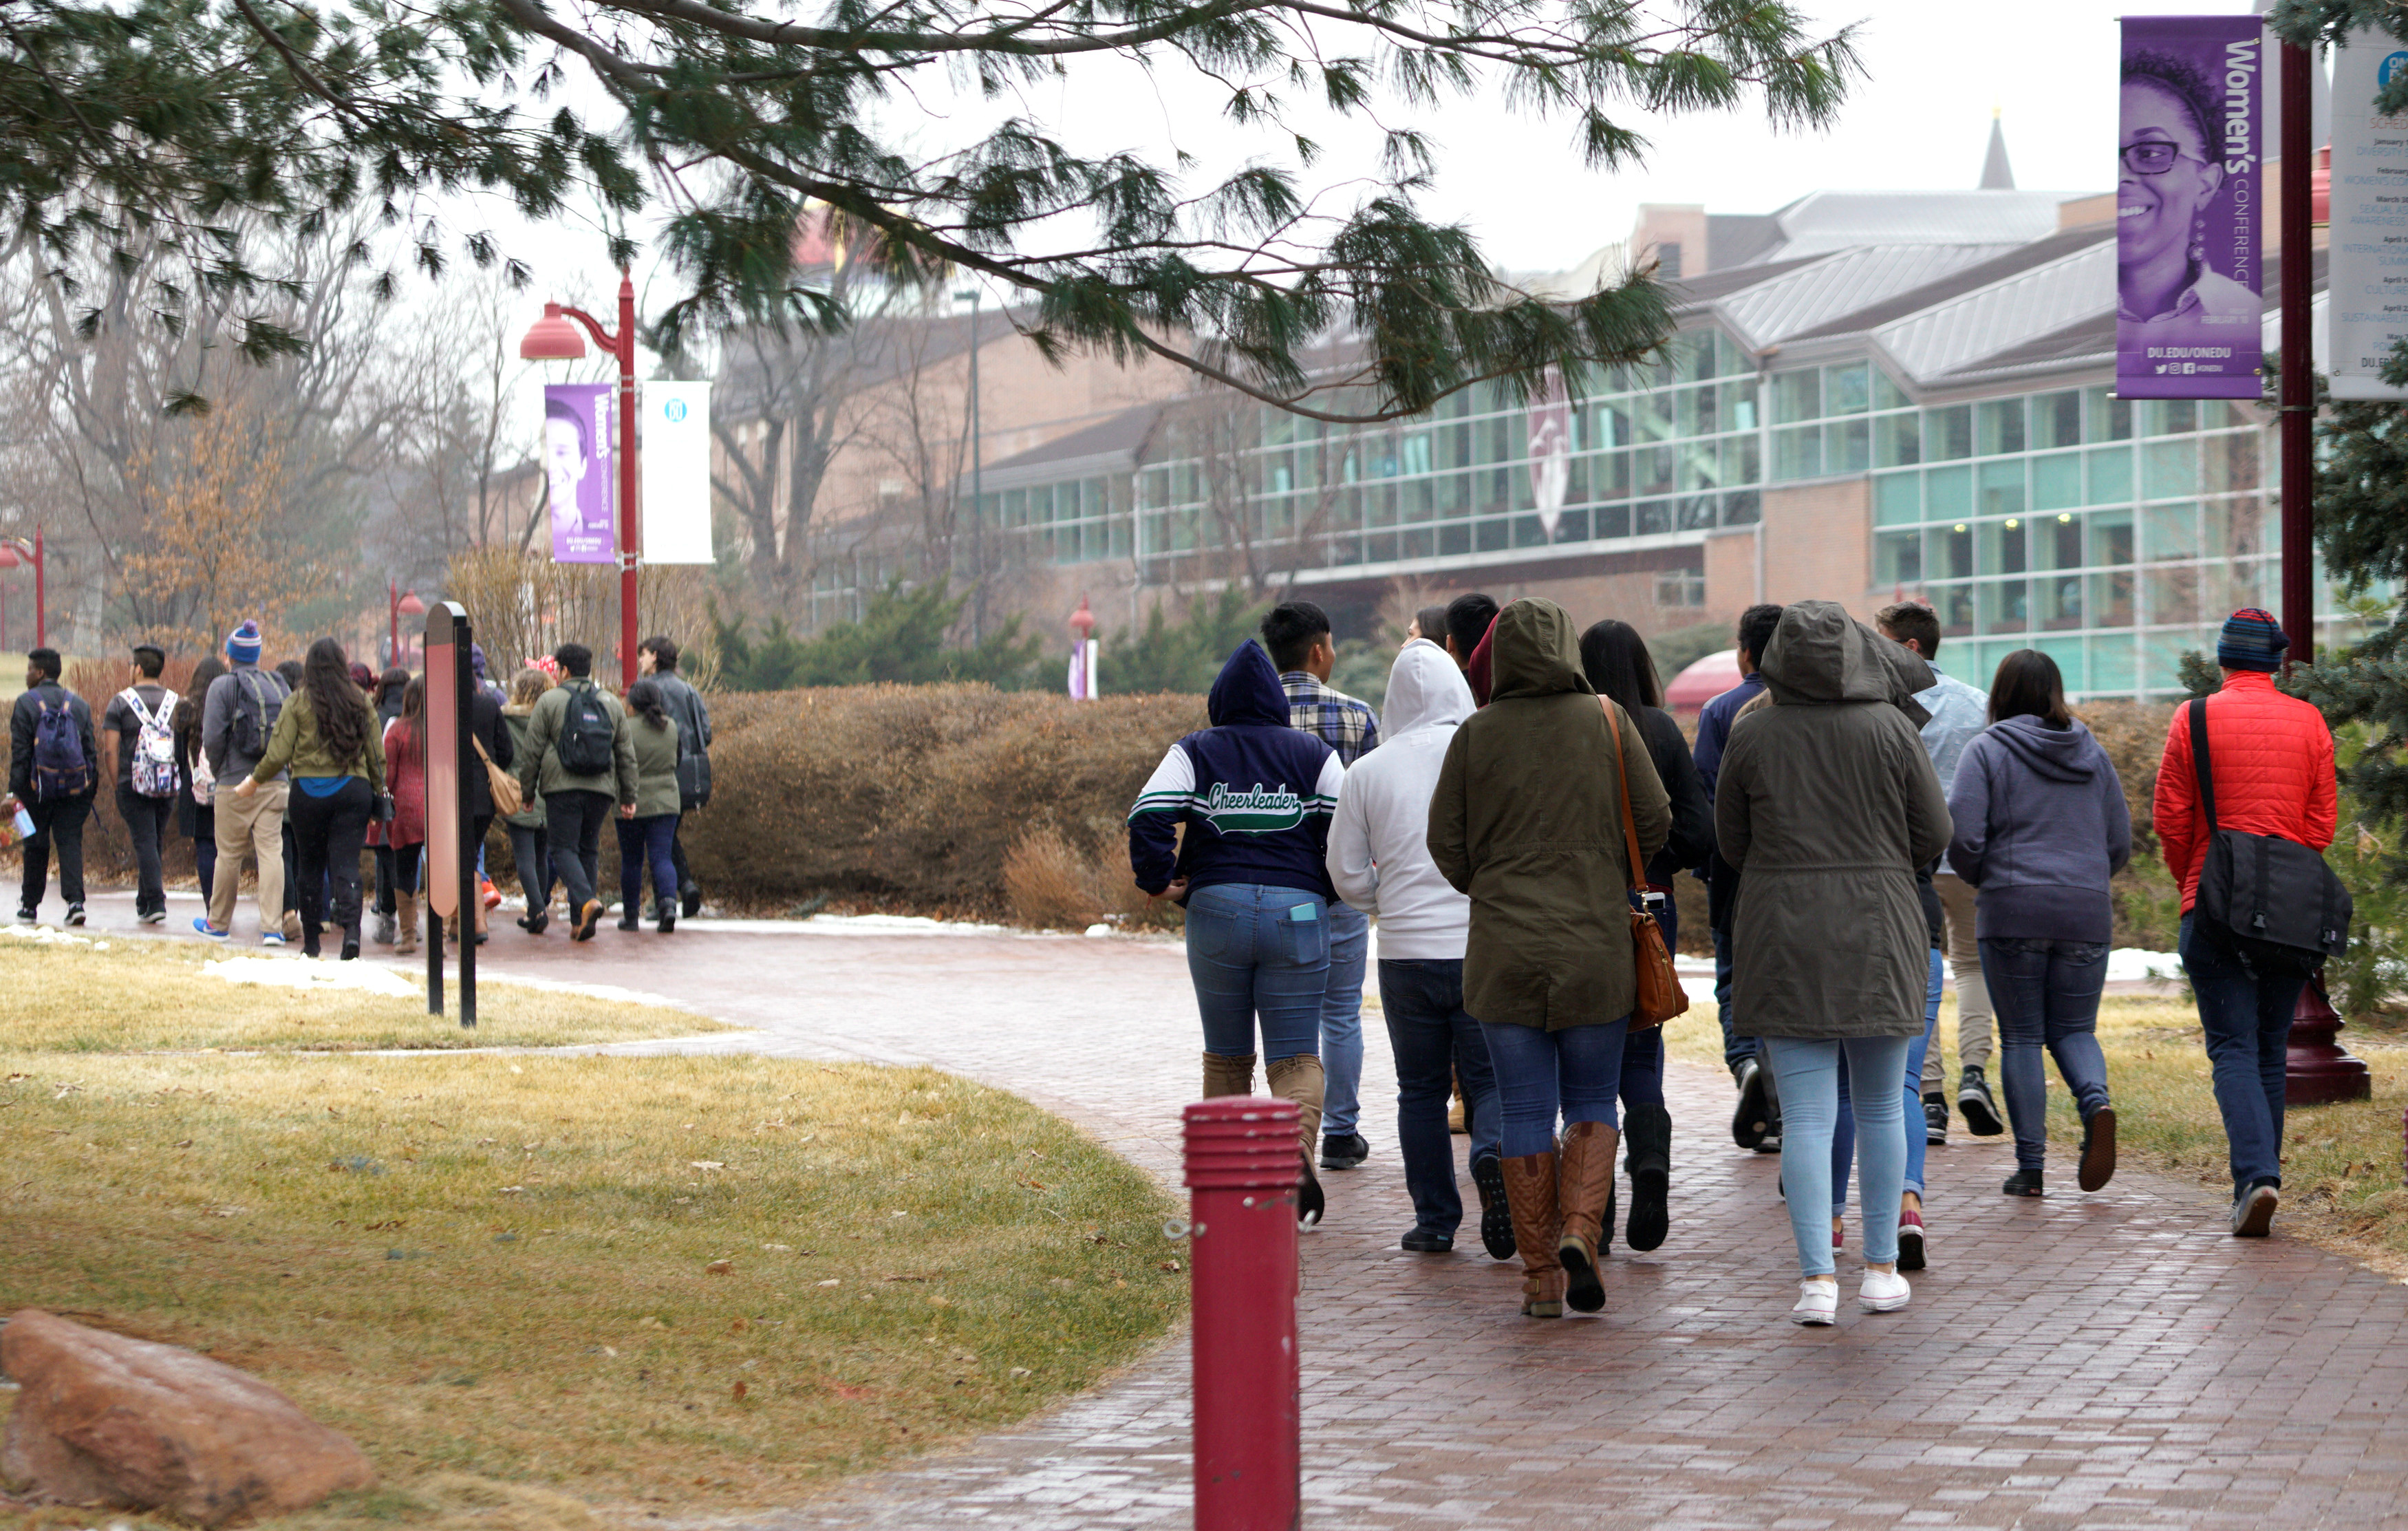 Prospective students take a tour at the University of Denver in Denver